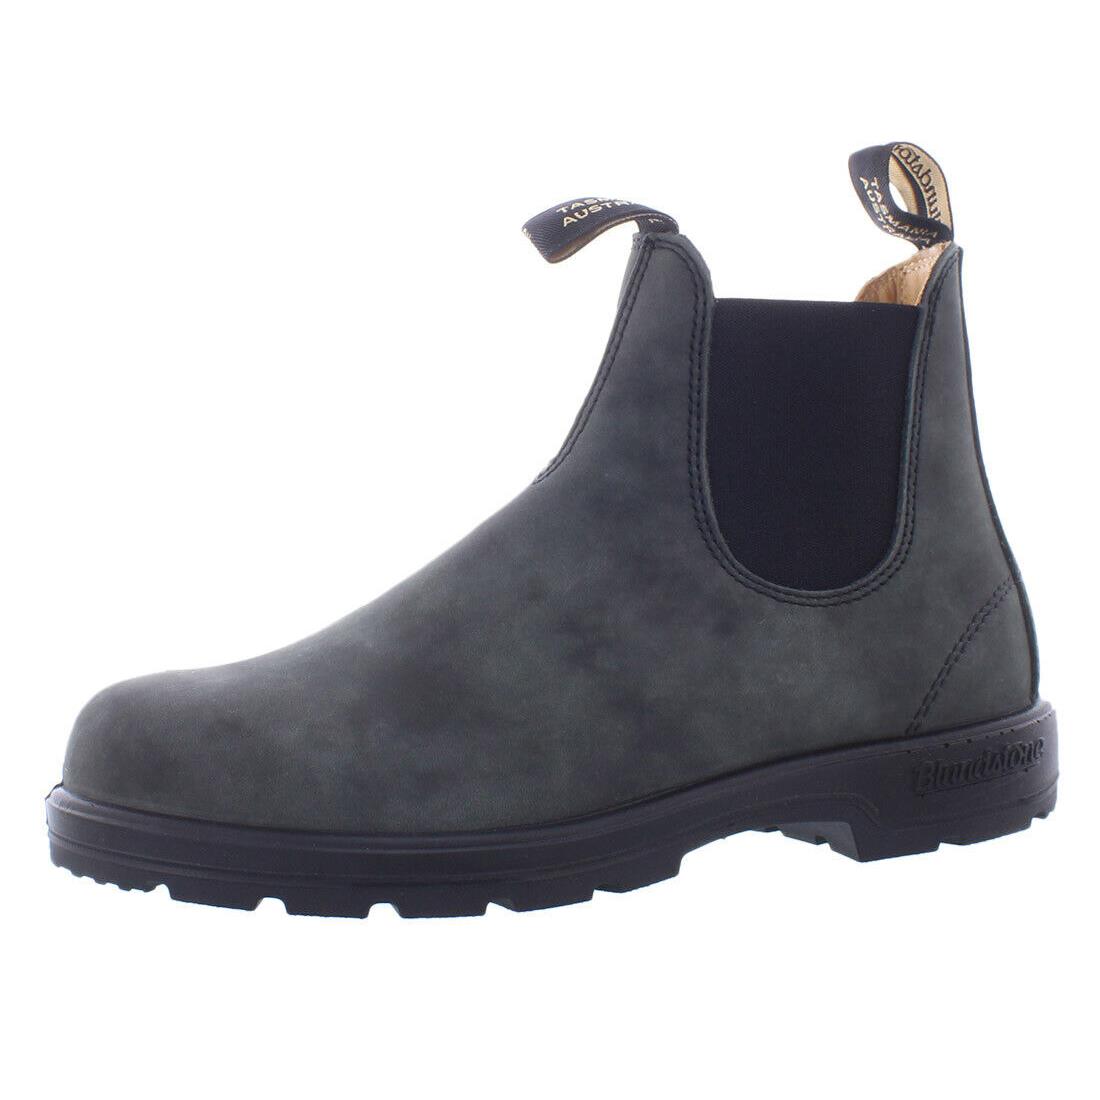 Blundstone 587 Chelsea Unisex Shoes - Rustic Black, Main: Black